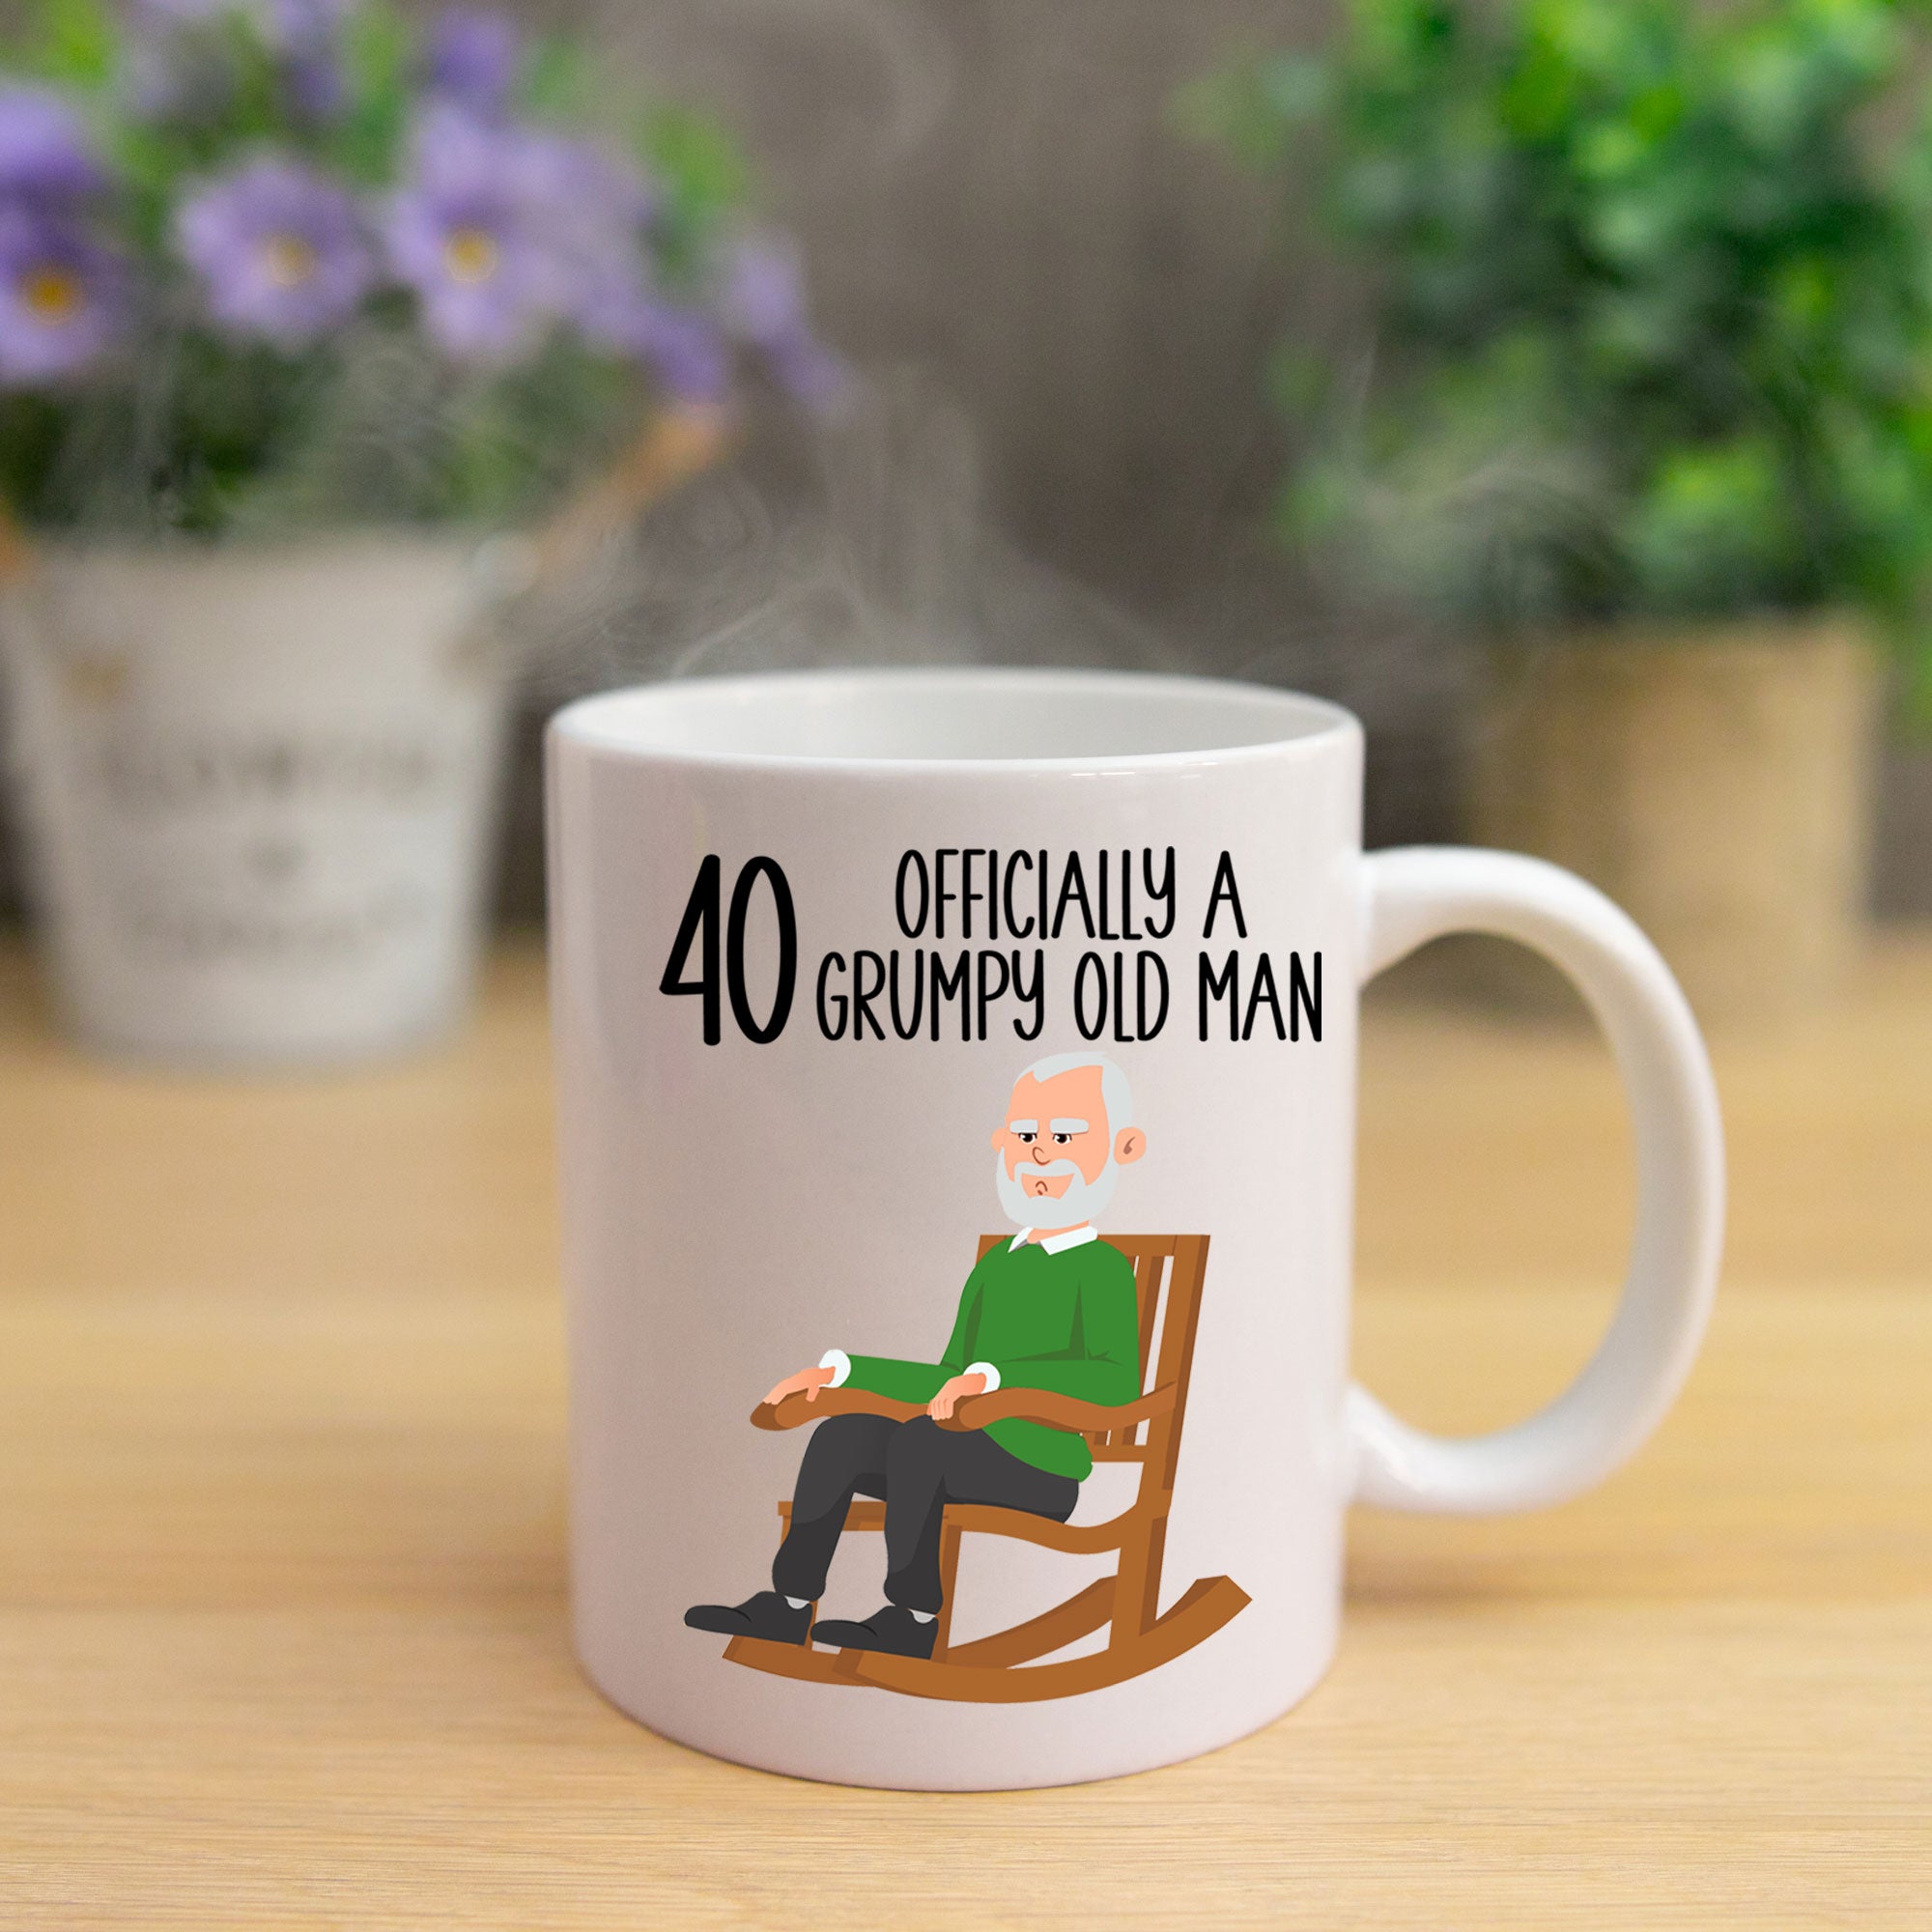 Old Person Gift Funny Mug For Men Gift For Grandpa Funny Grandpa Gift | eBay